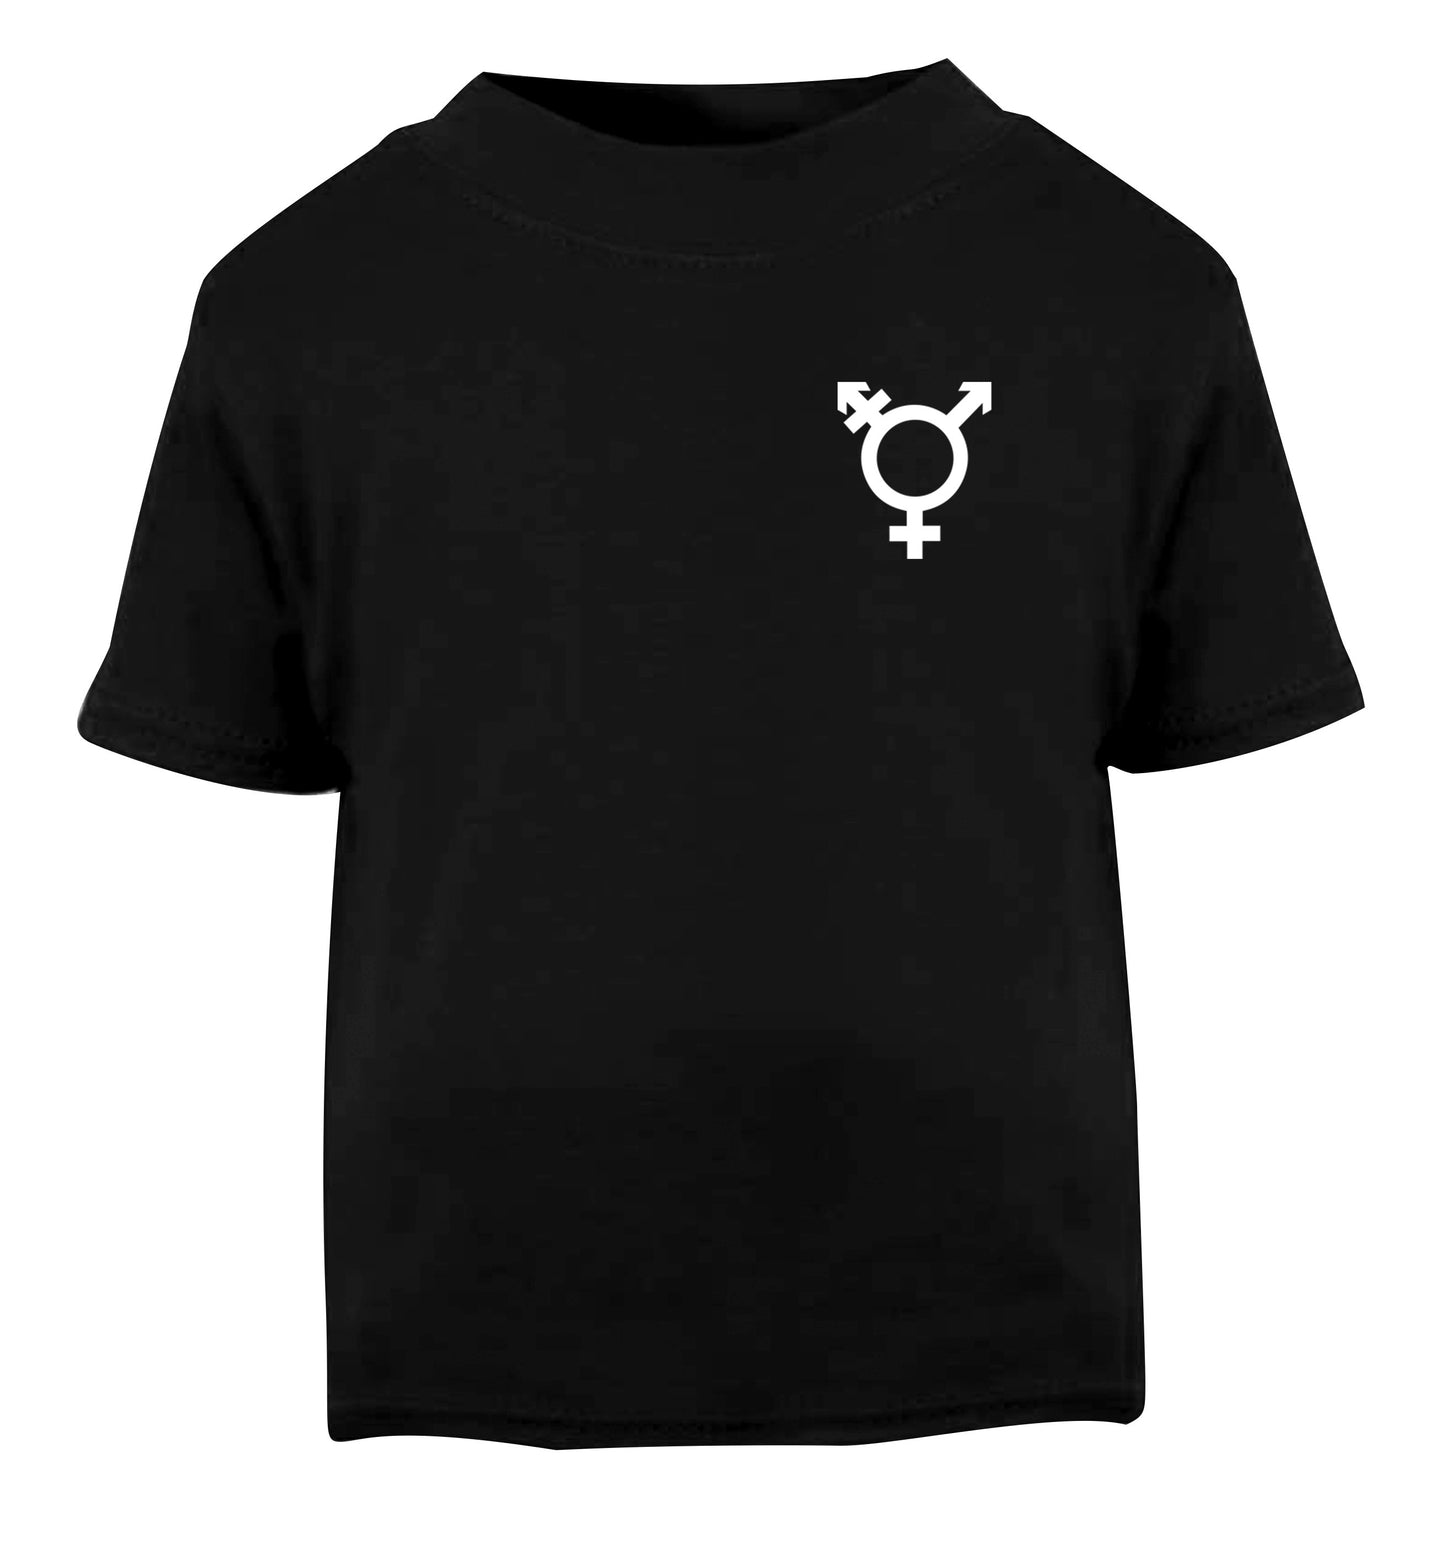 Trans gender symbol pocket Black Baby Toddler Tshirt 2 years